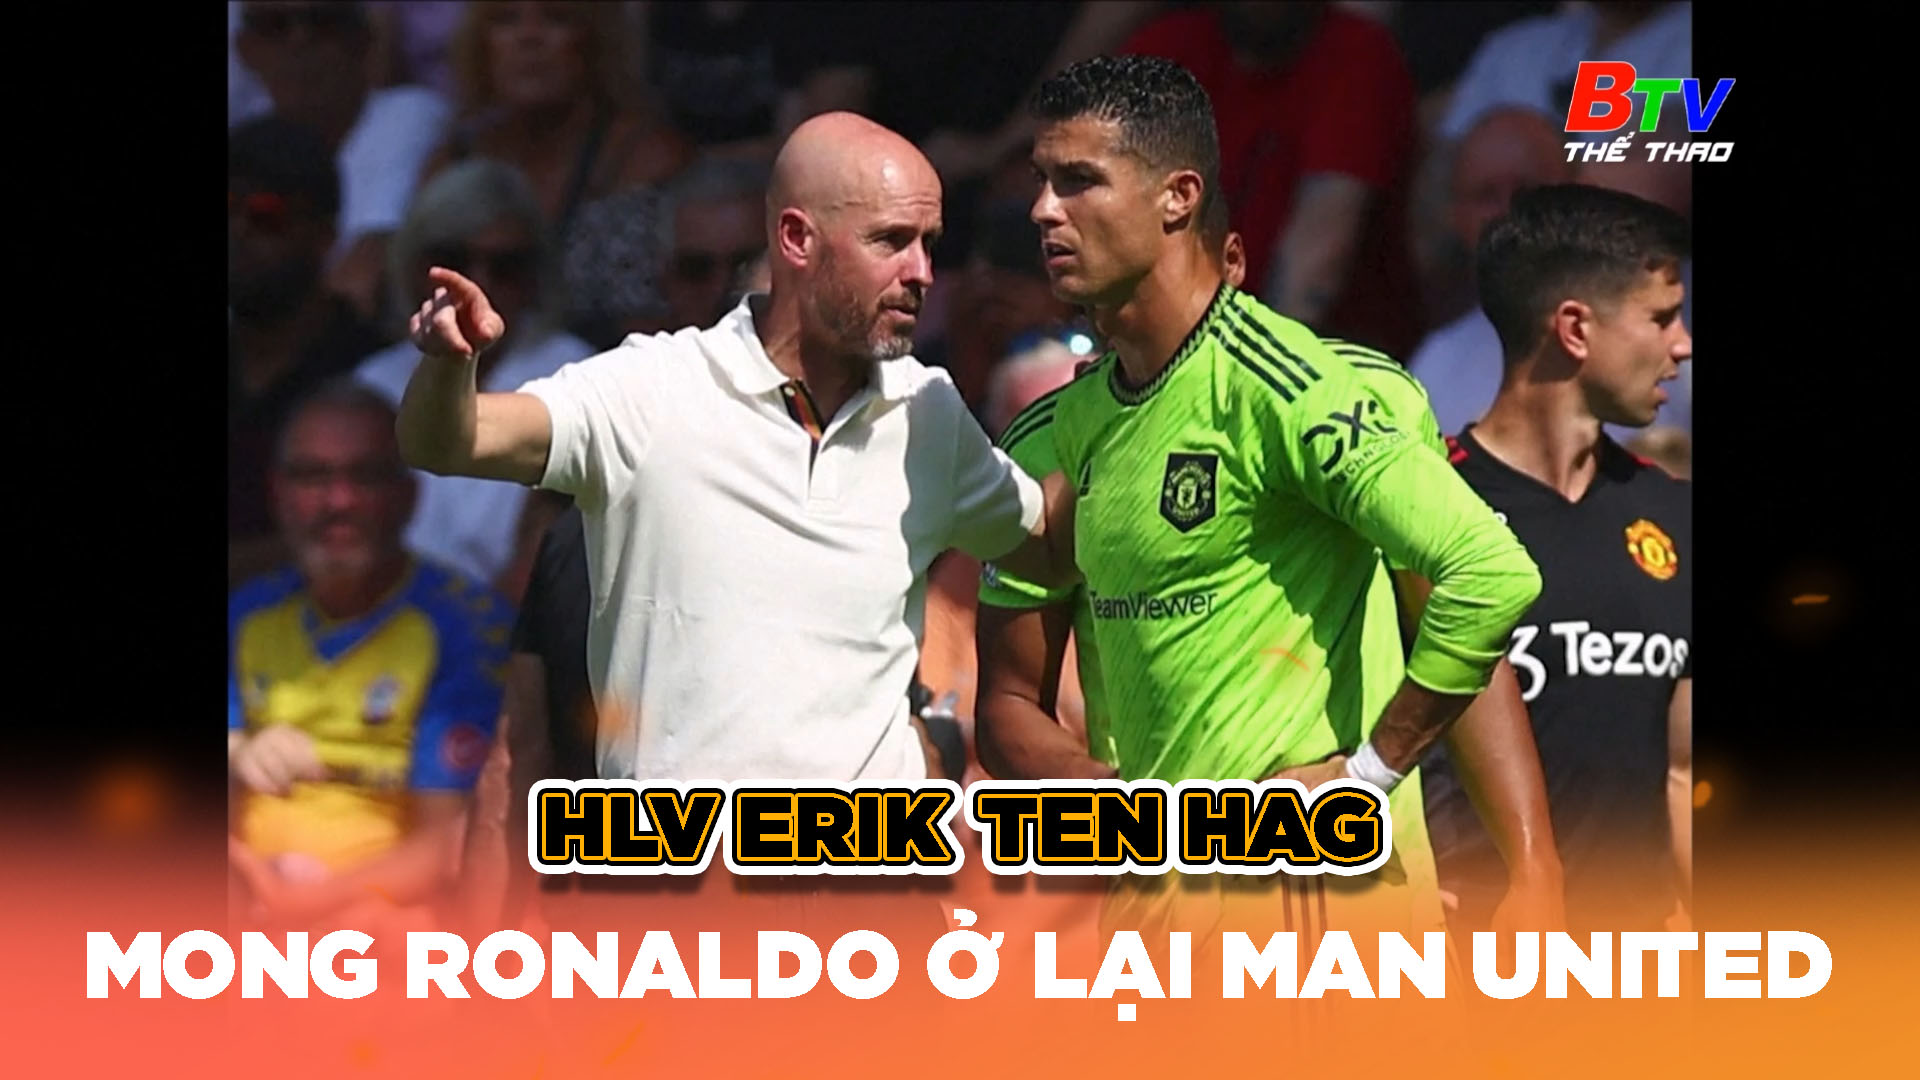 	HLV Erik Ten Hag mong Ronaldo ở lại Man United